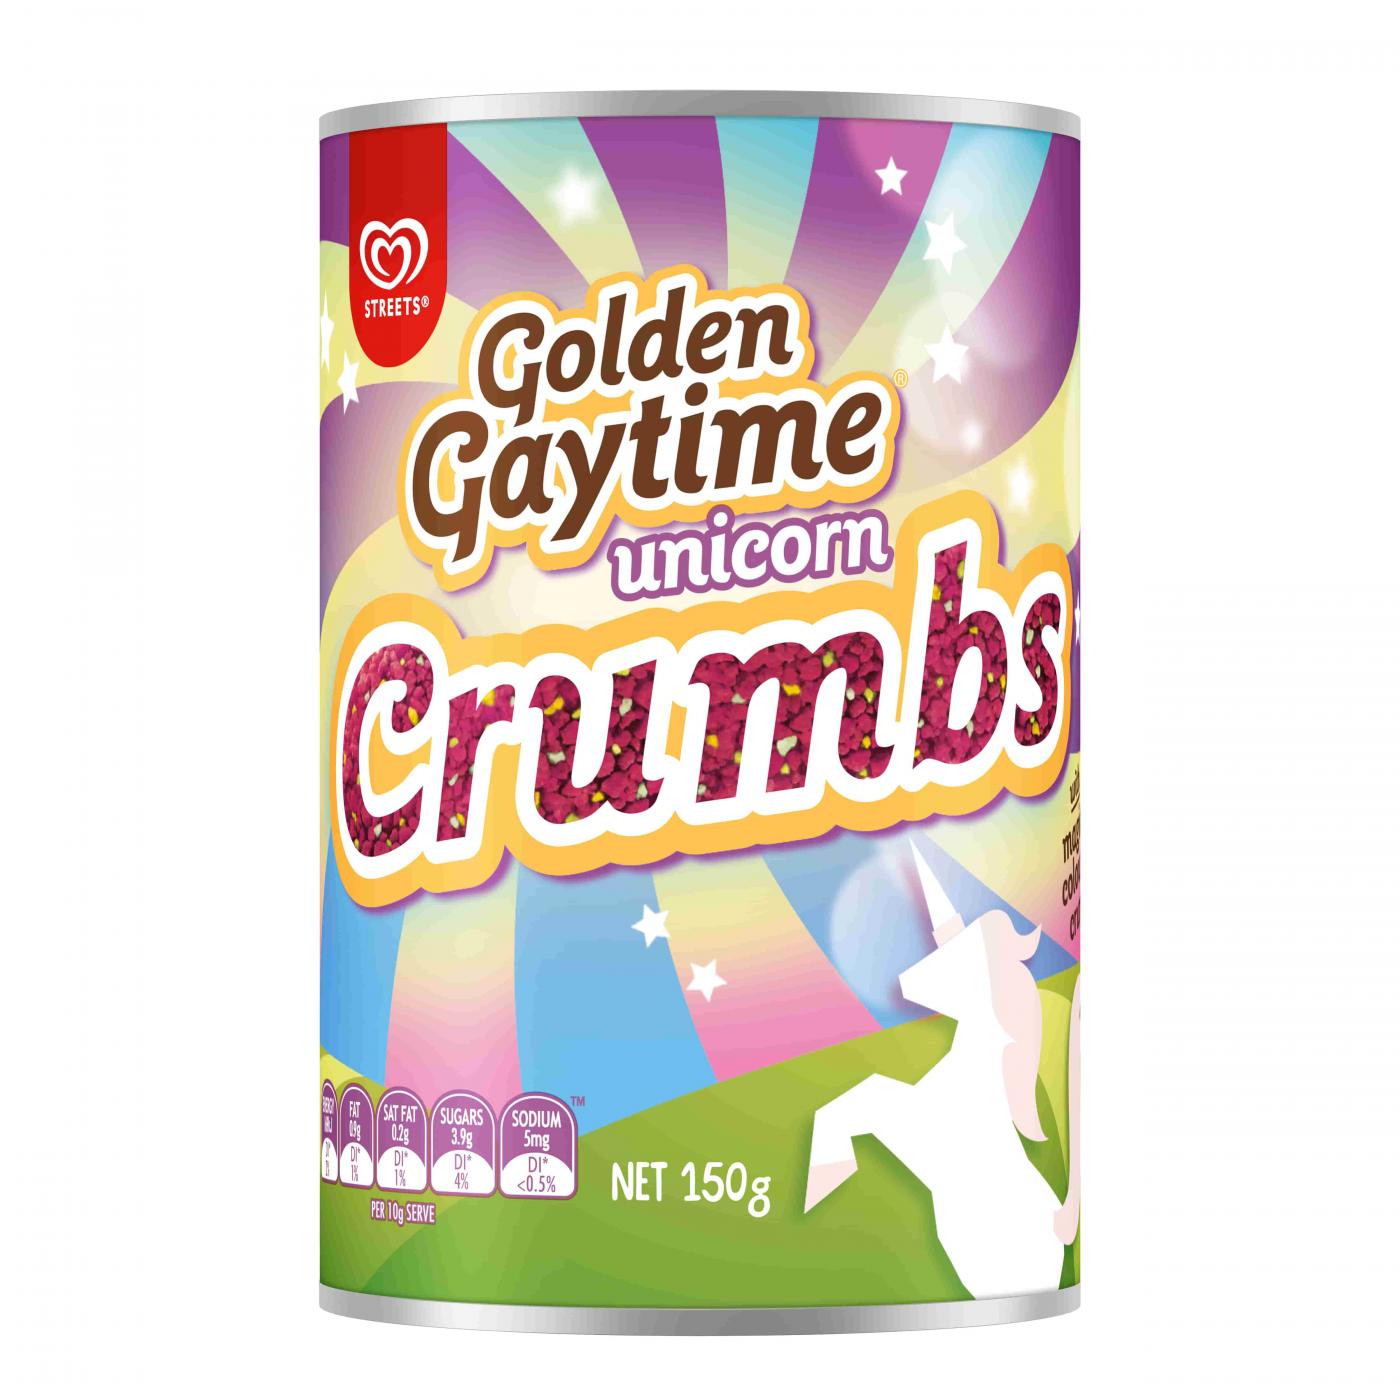 golden_gaytime_unicorn_crumbs.jpg